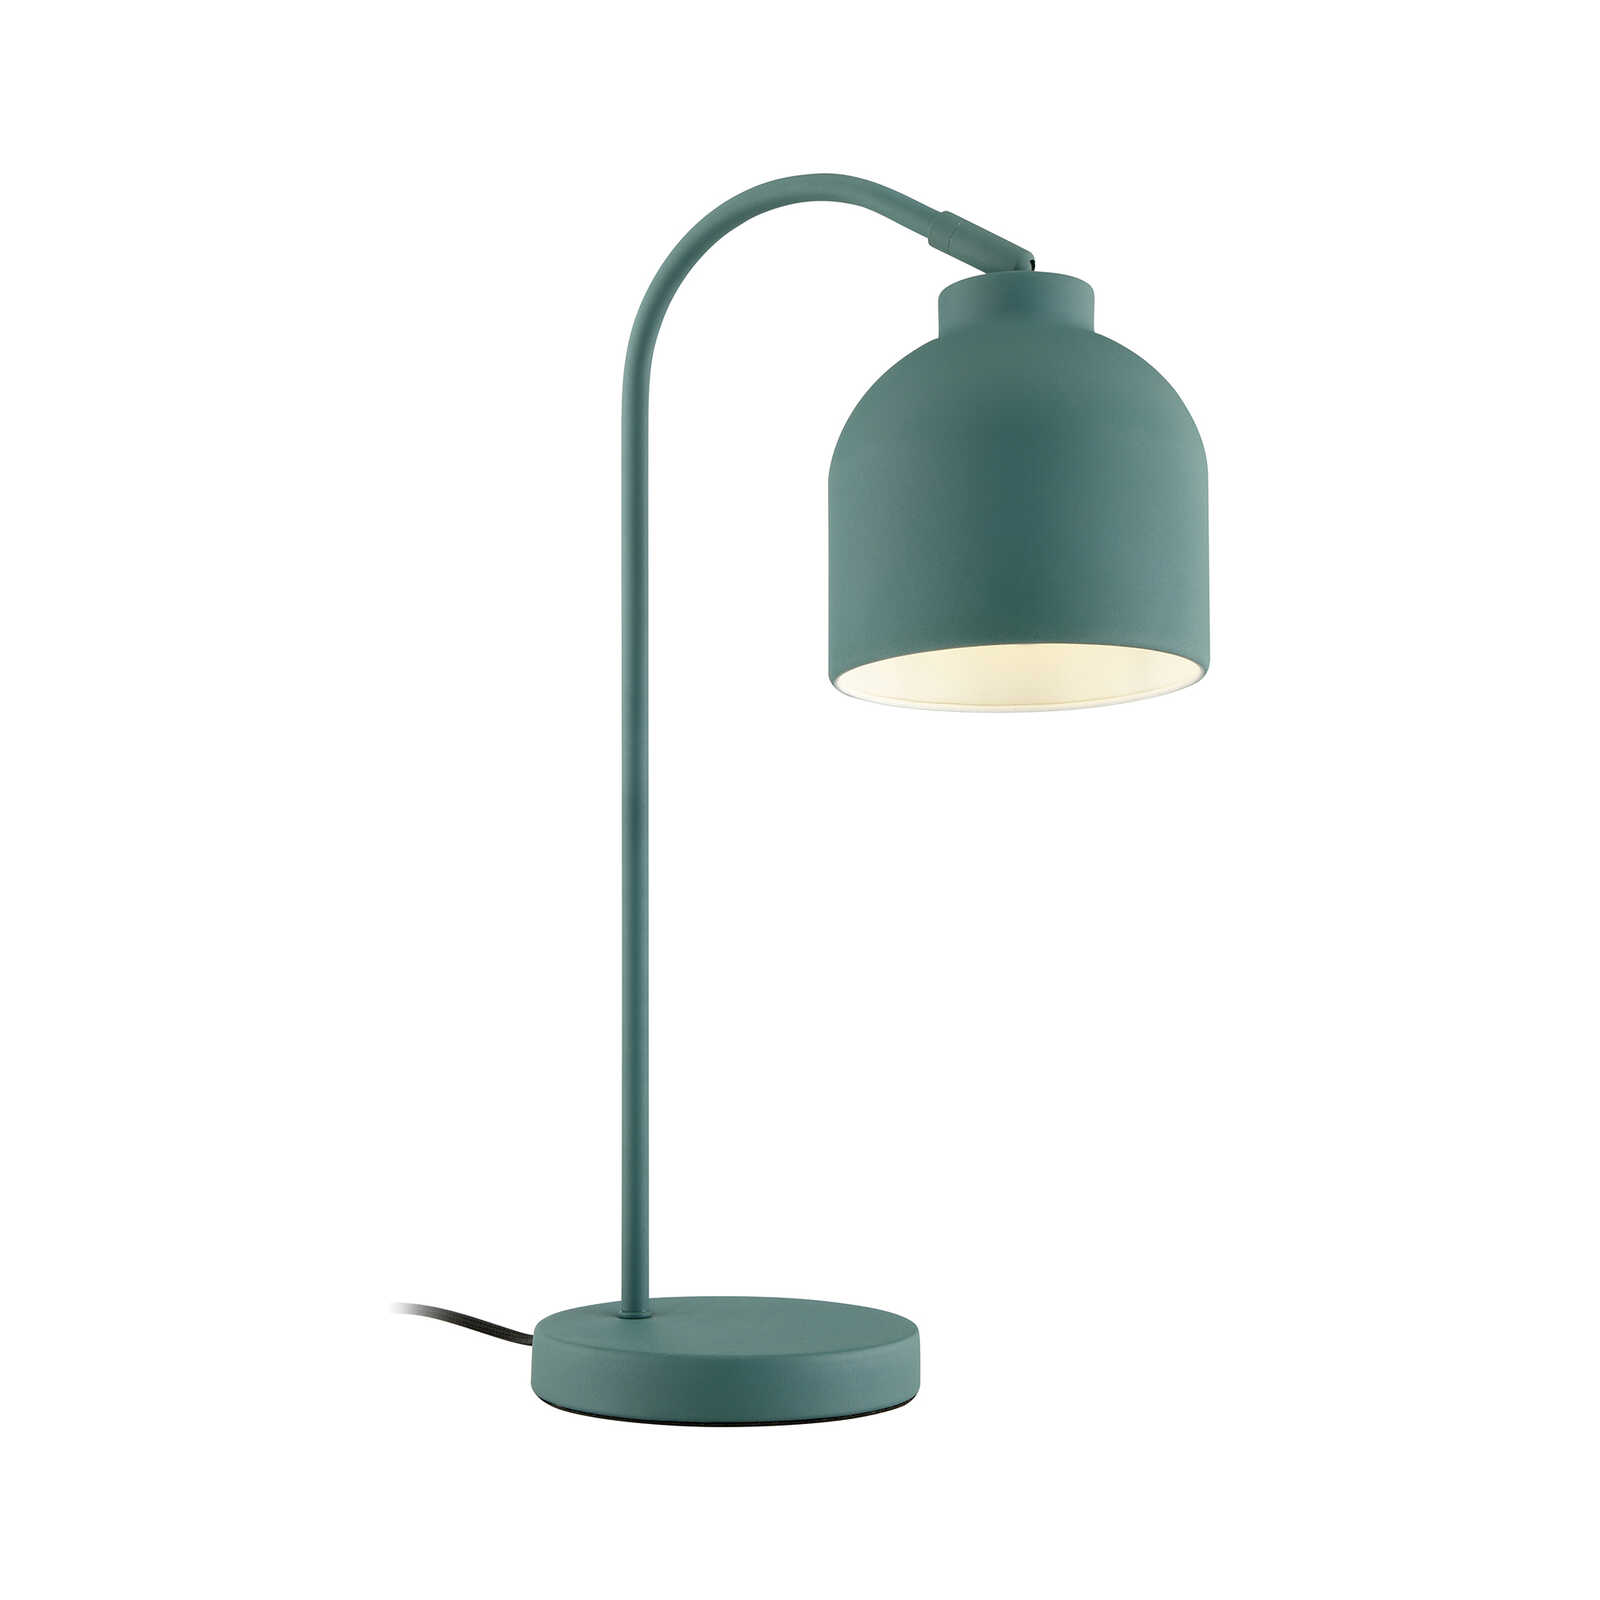 Lampe de table en métal - Patrick 2 - Vert
